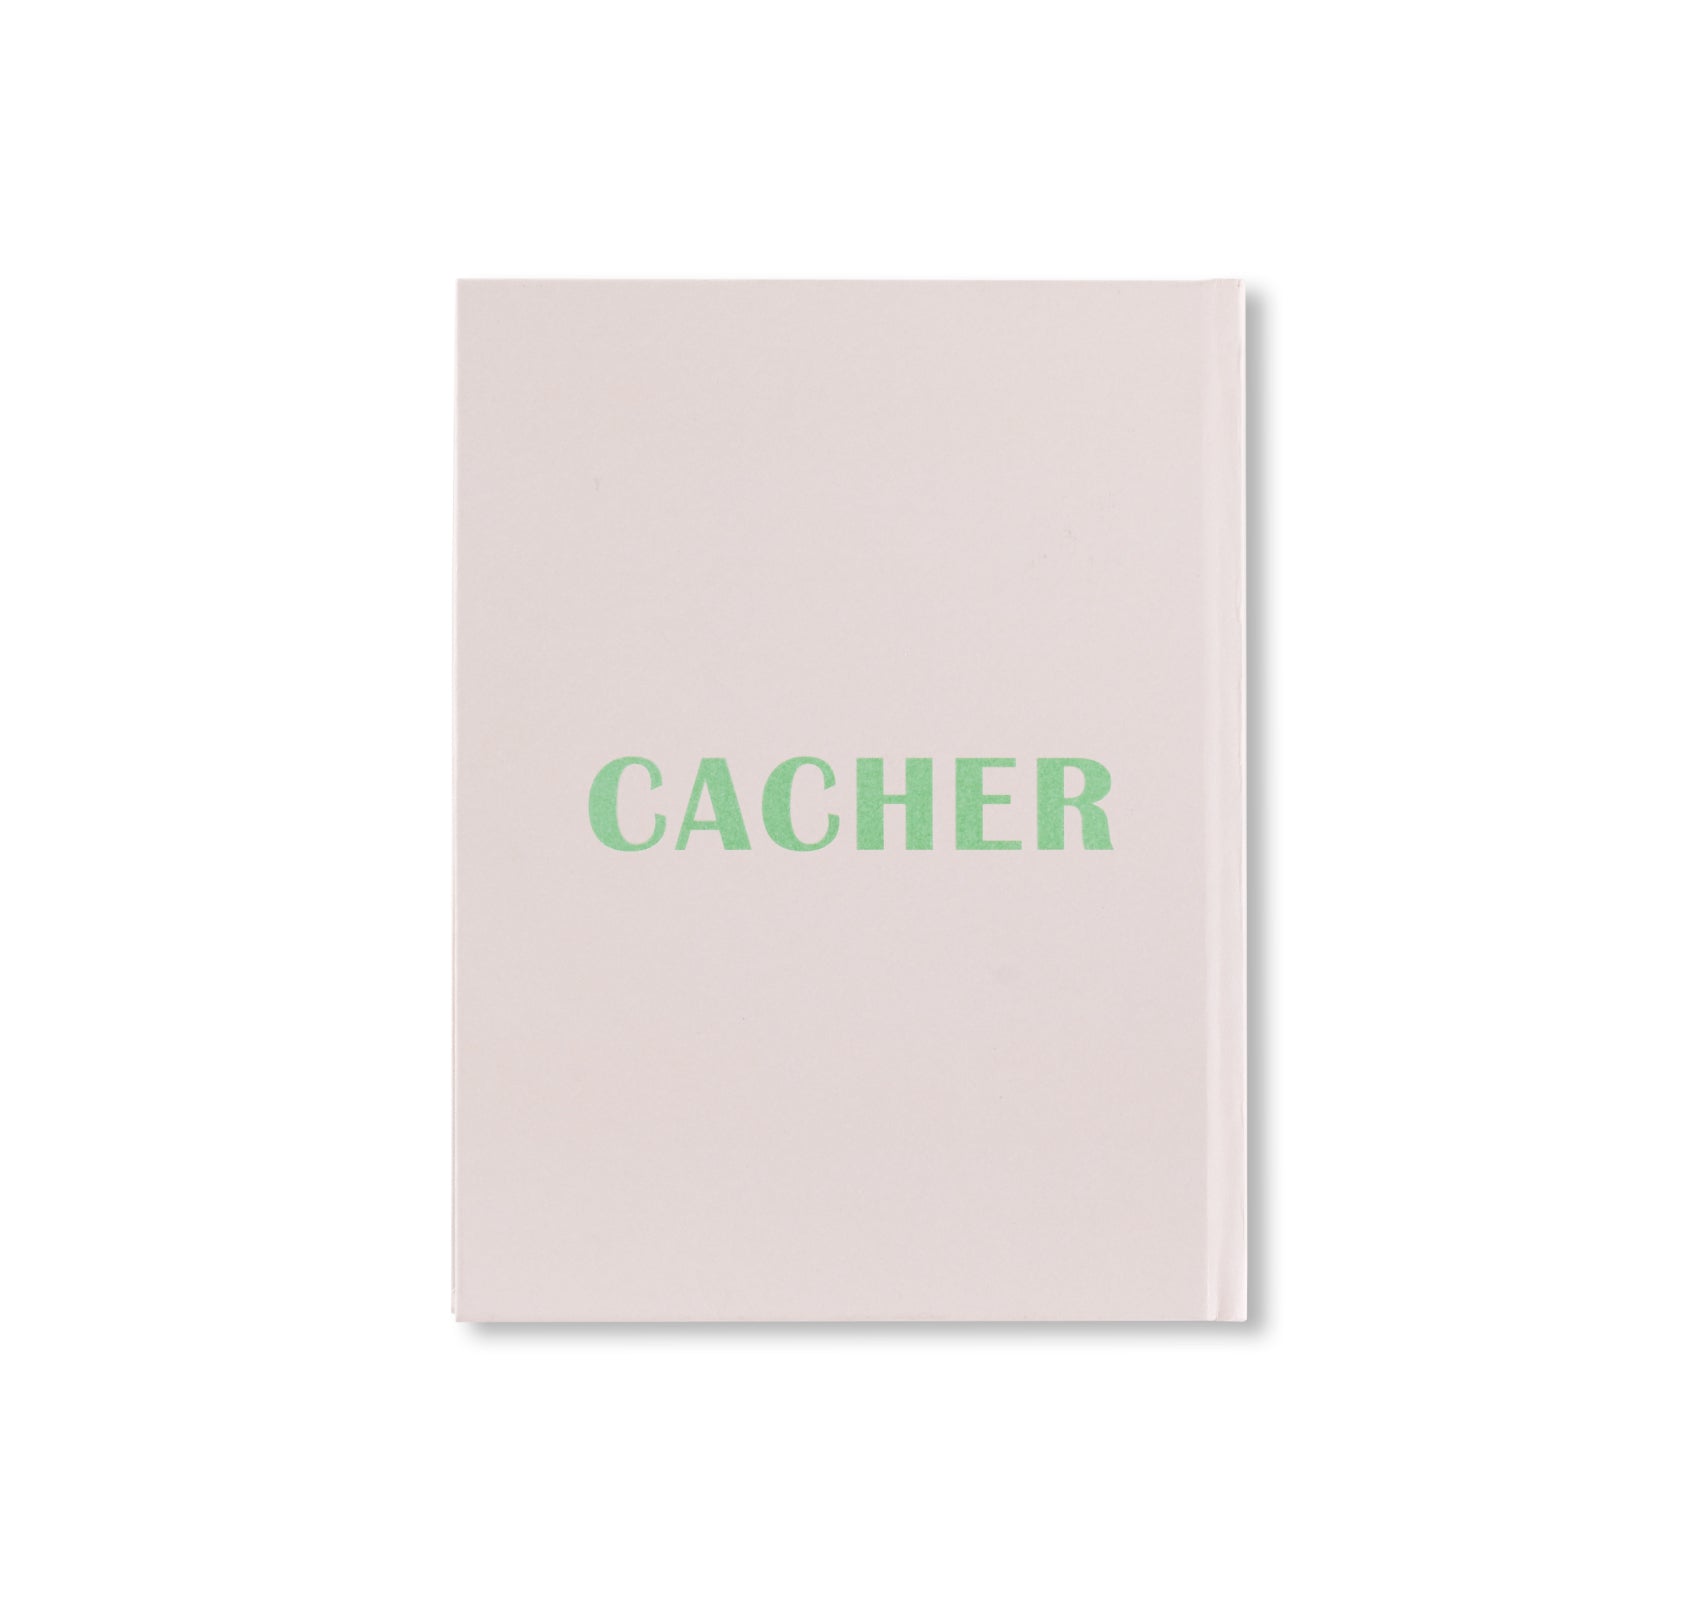 CACHER by Thy Tran